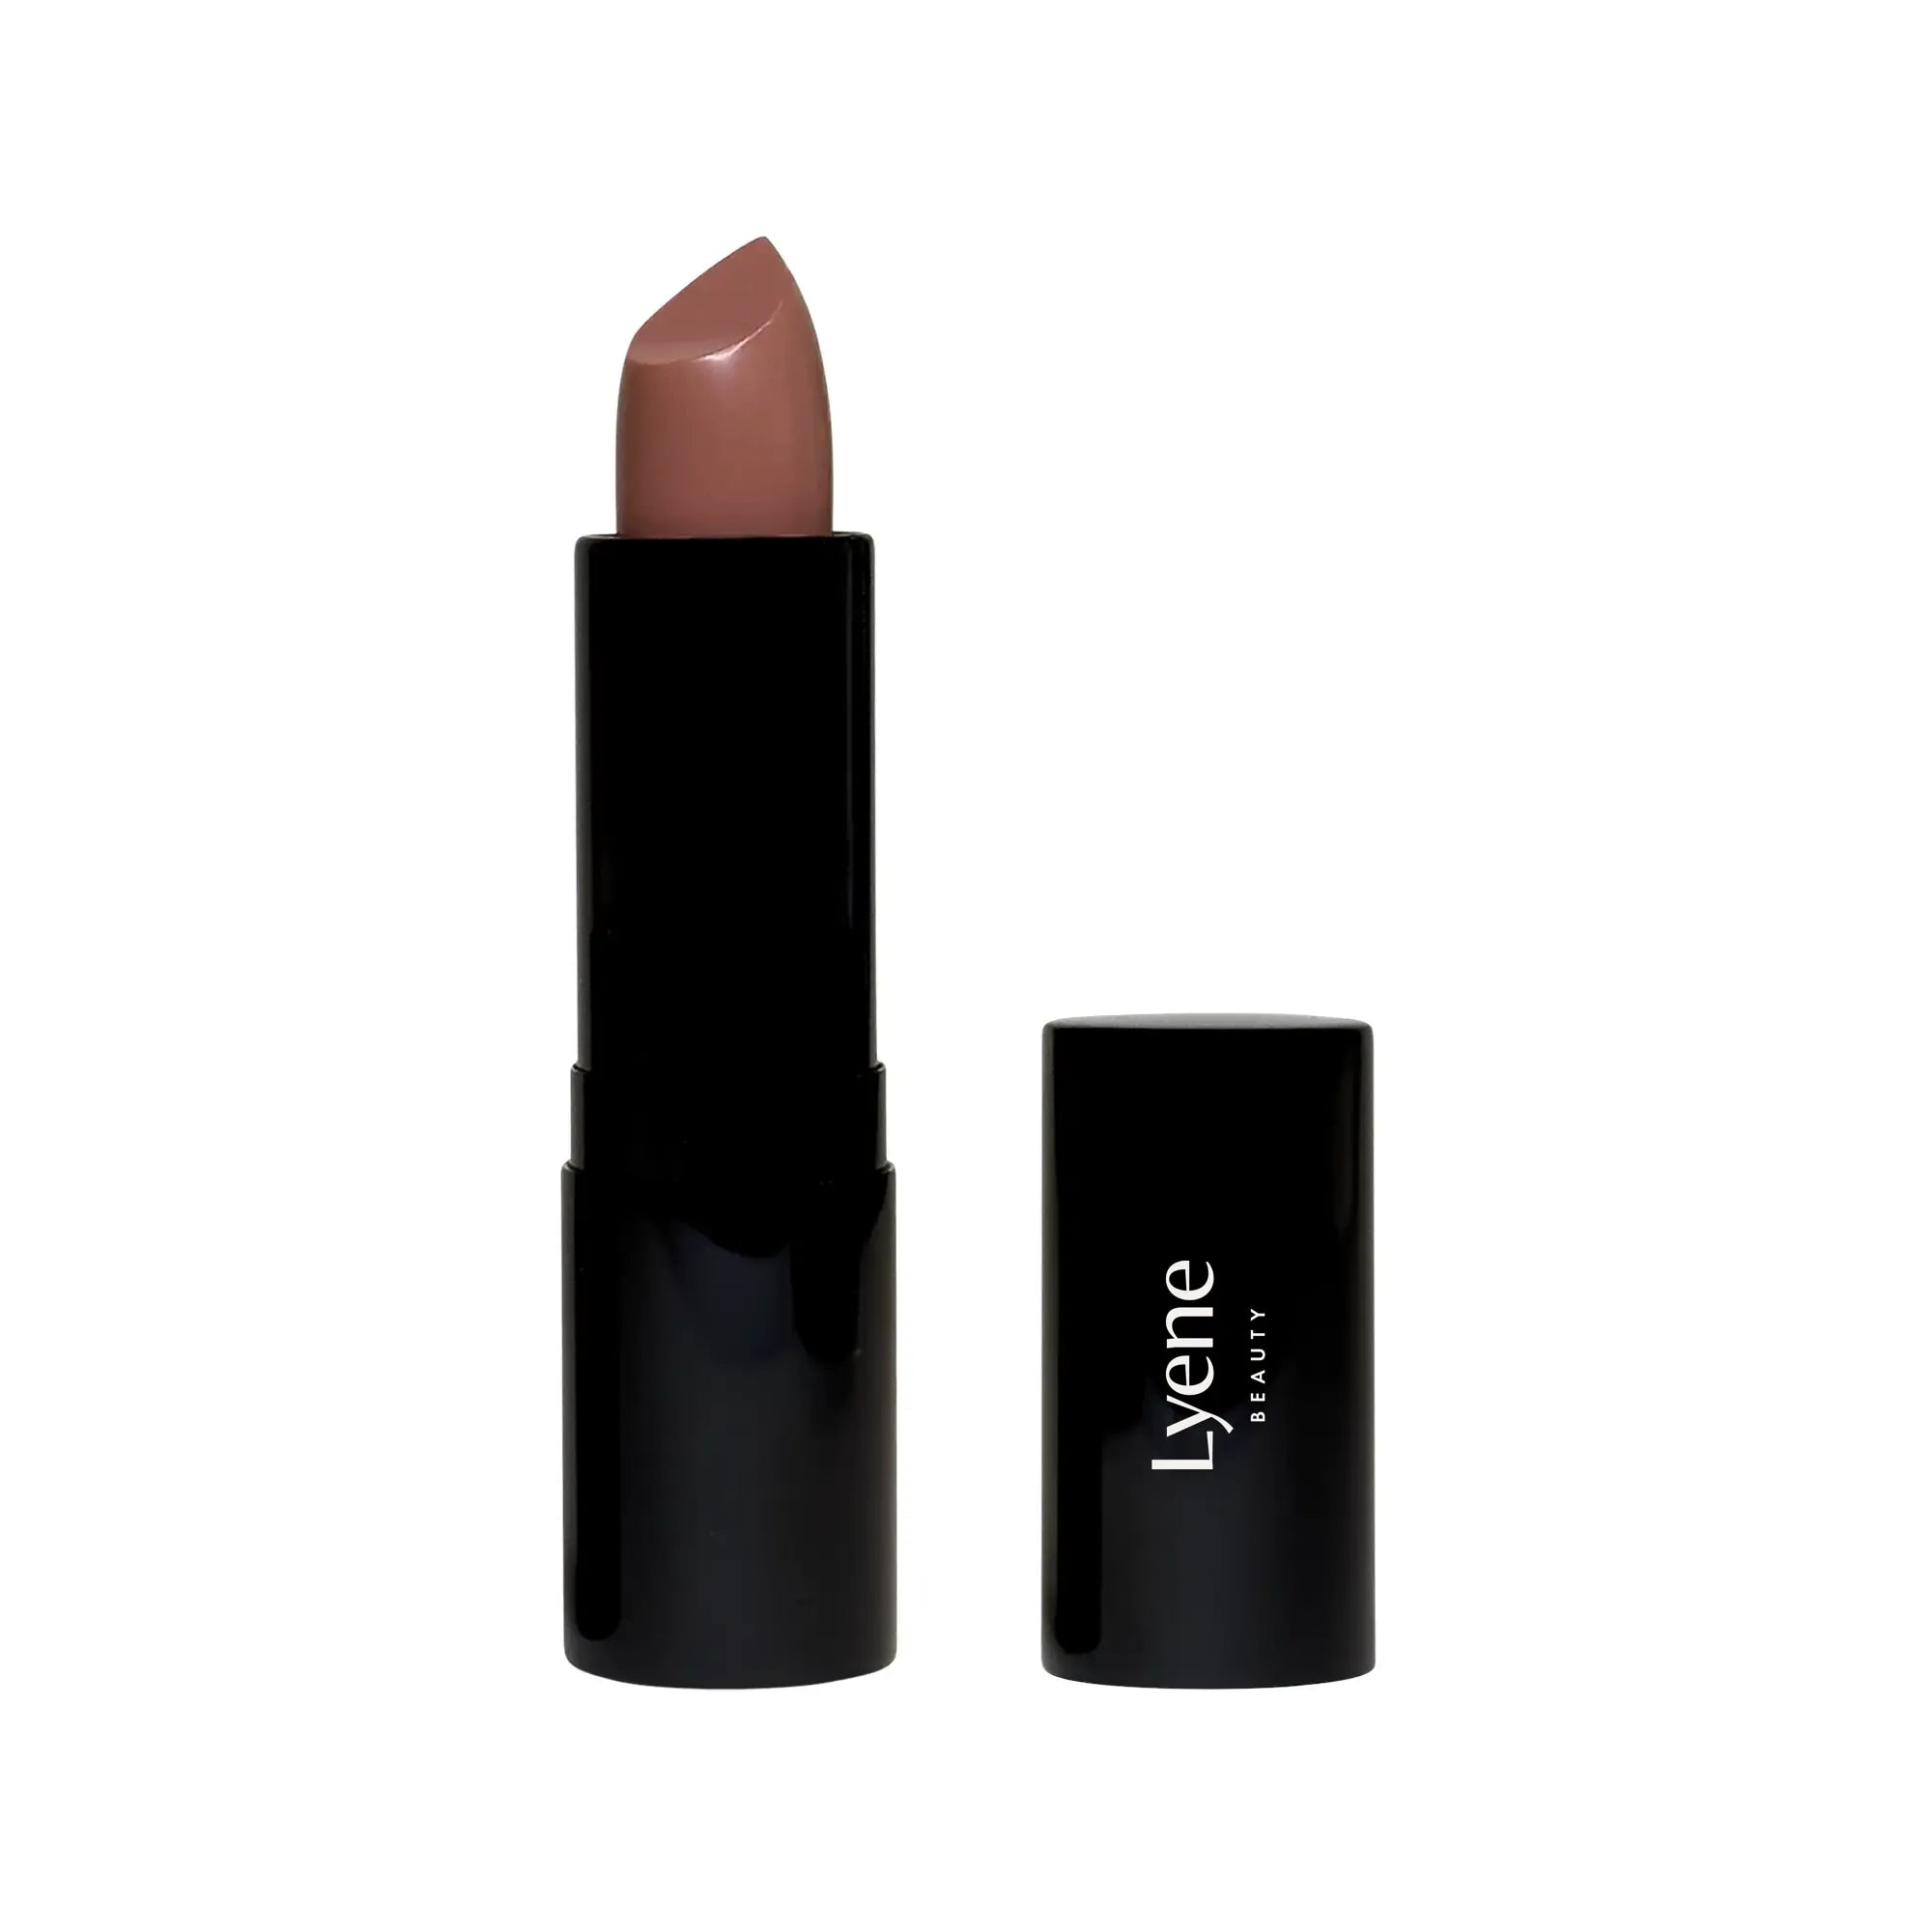 Naughty Nude Luxury Lipstick - Naughty Nude Luxury Lipstick